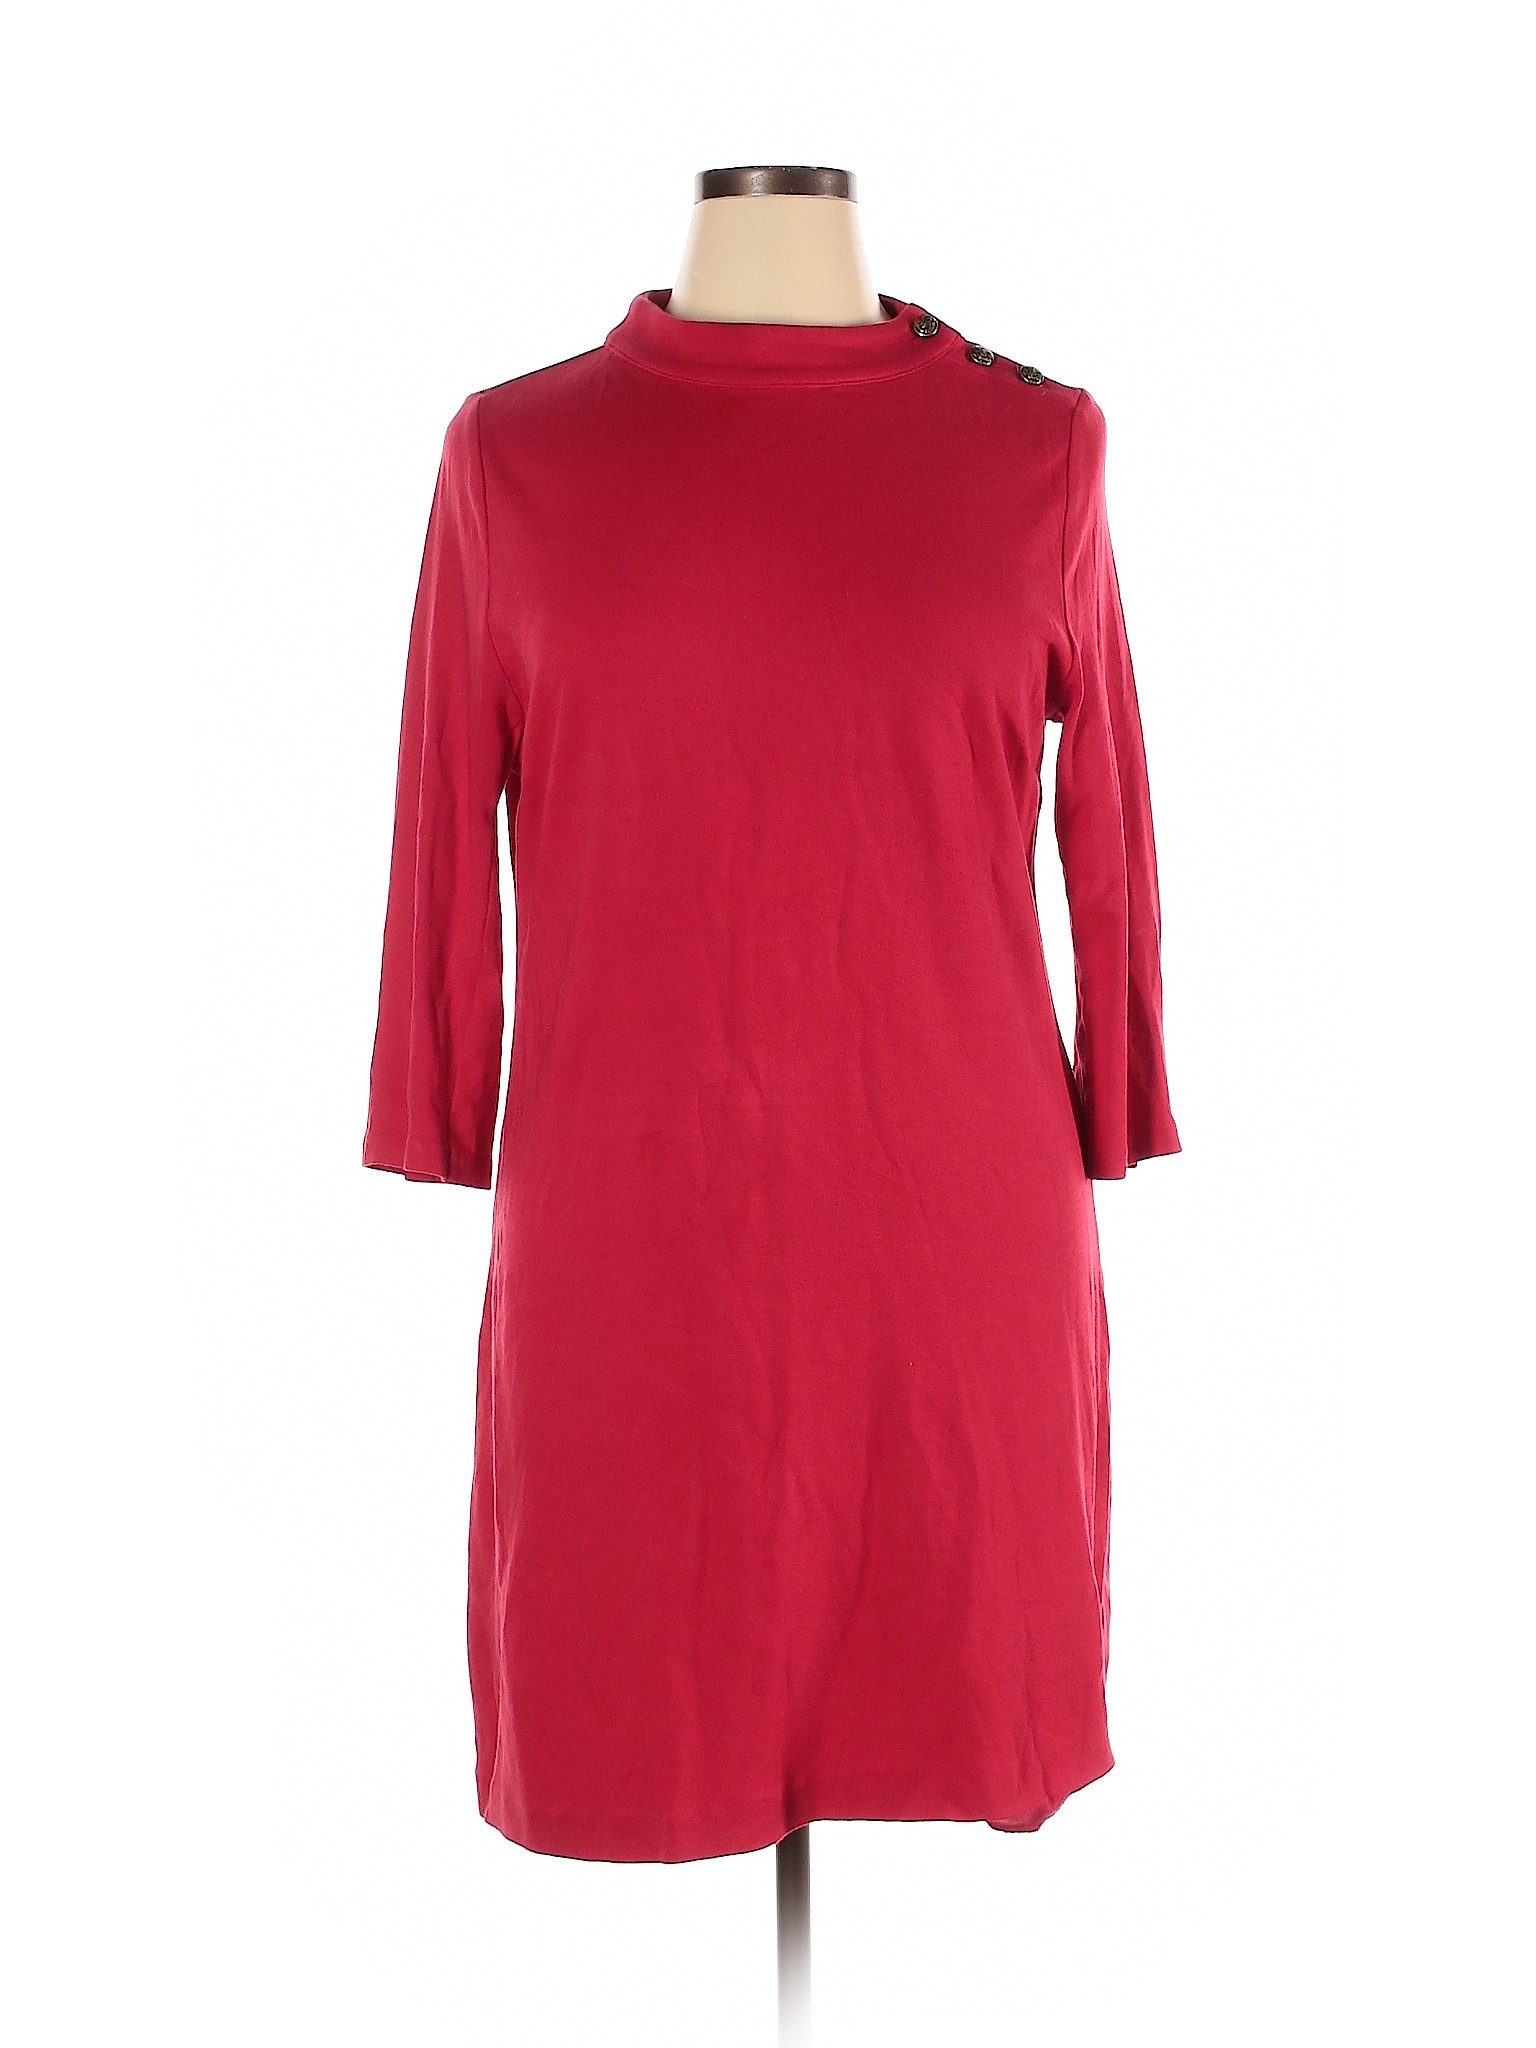 Talbots Women Red Casual Dress XL Petites | eBay